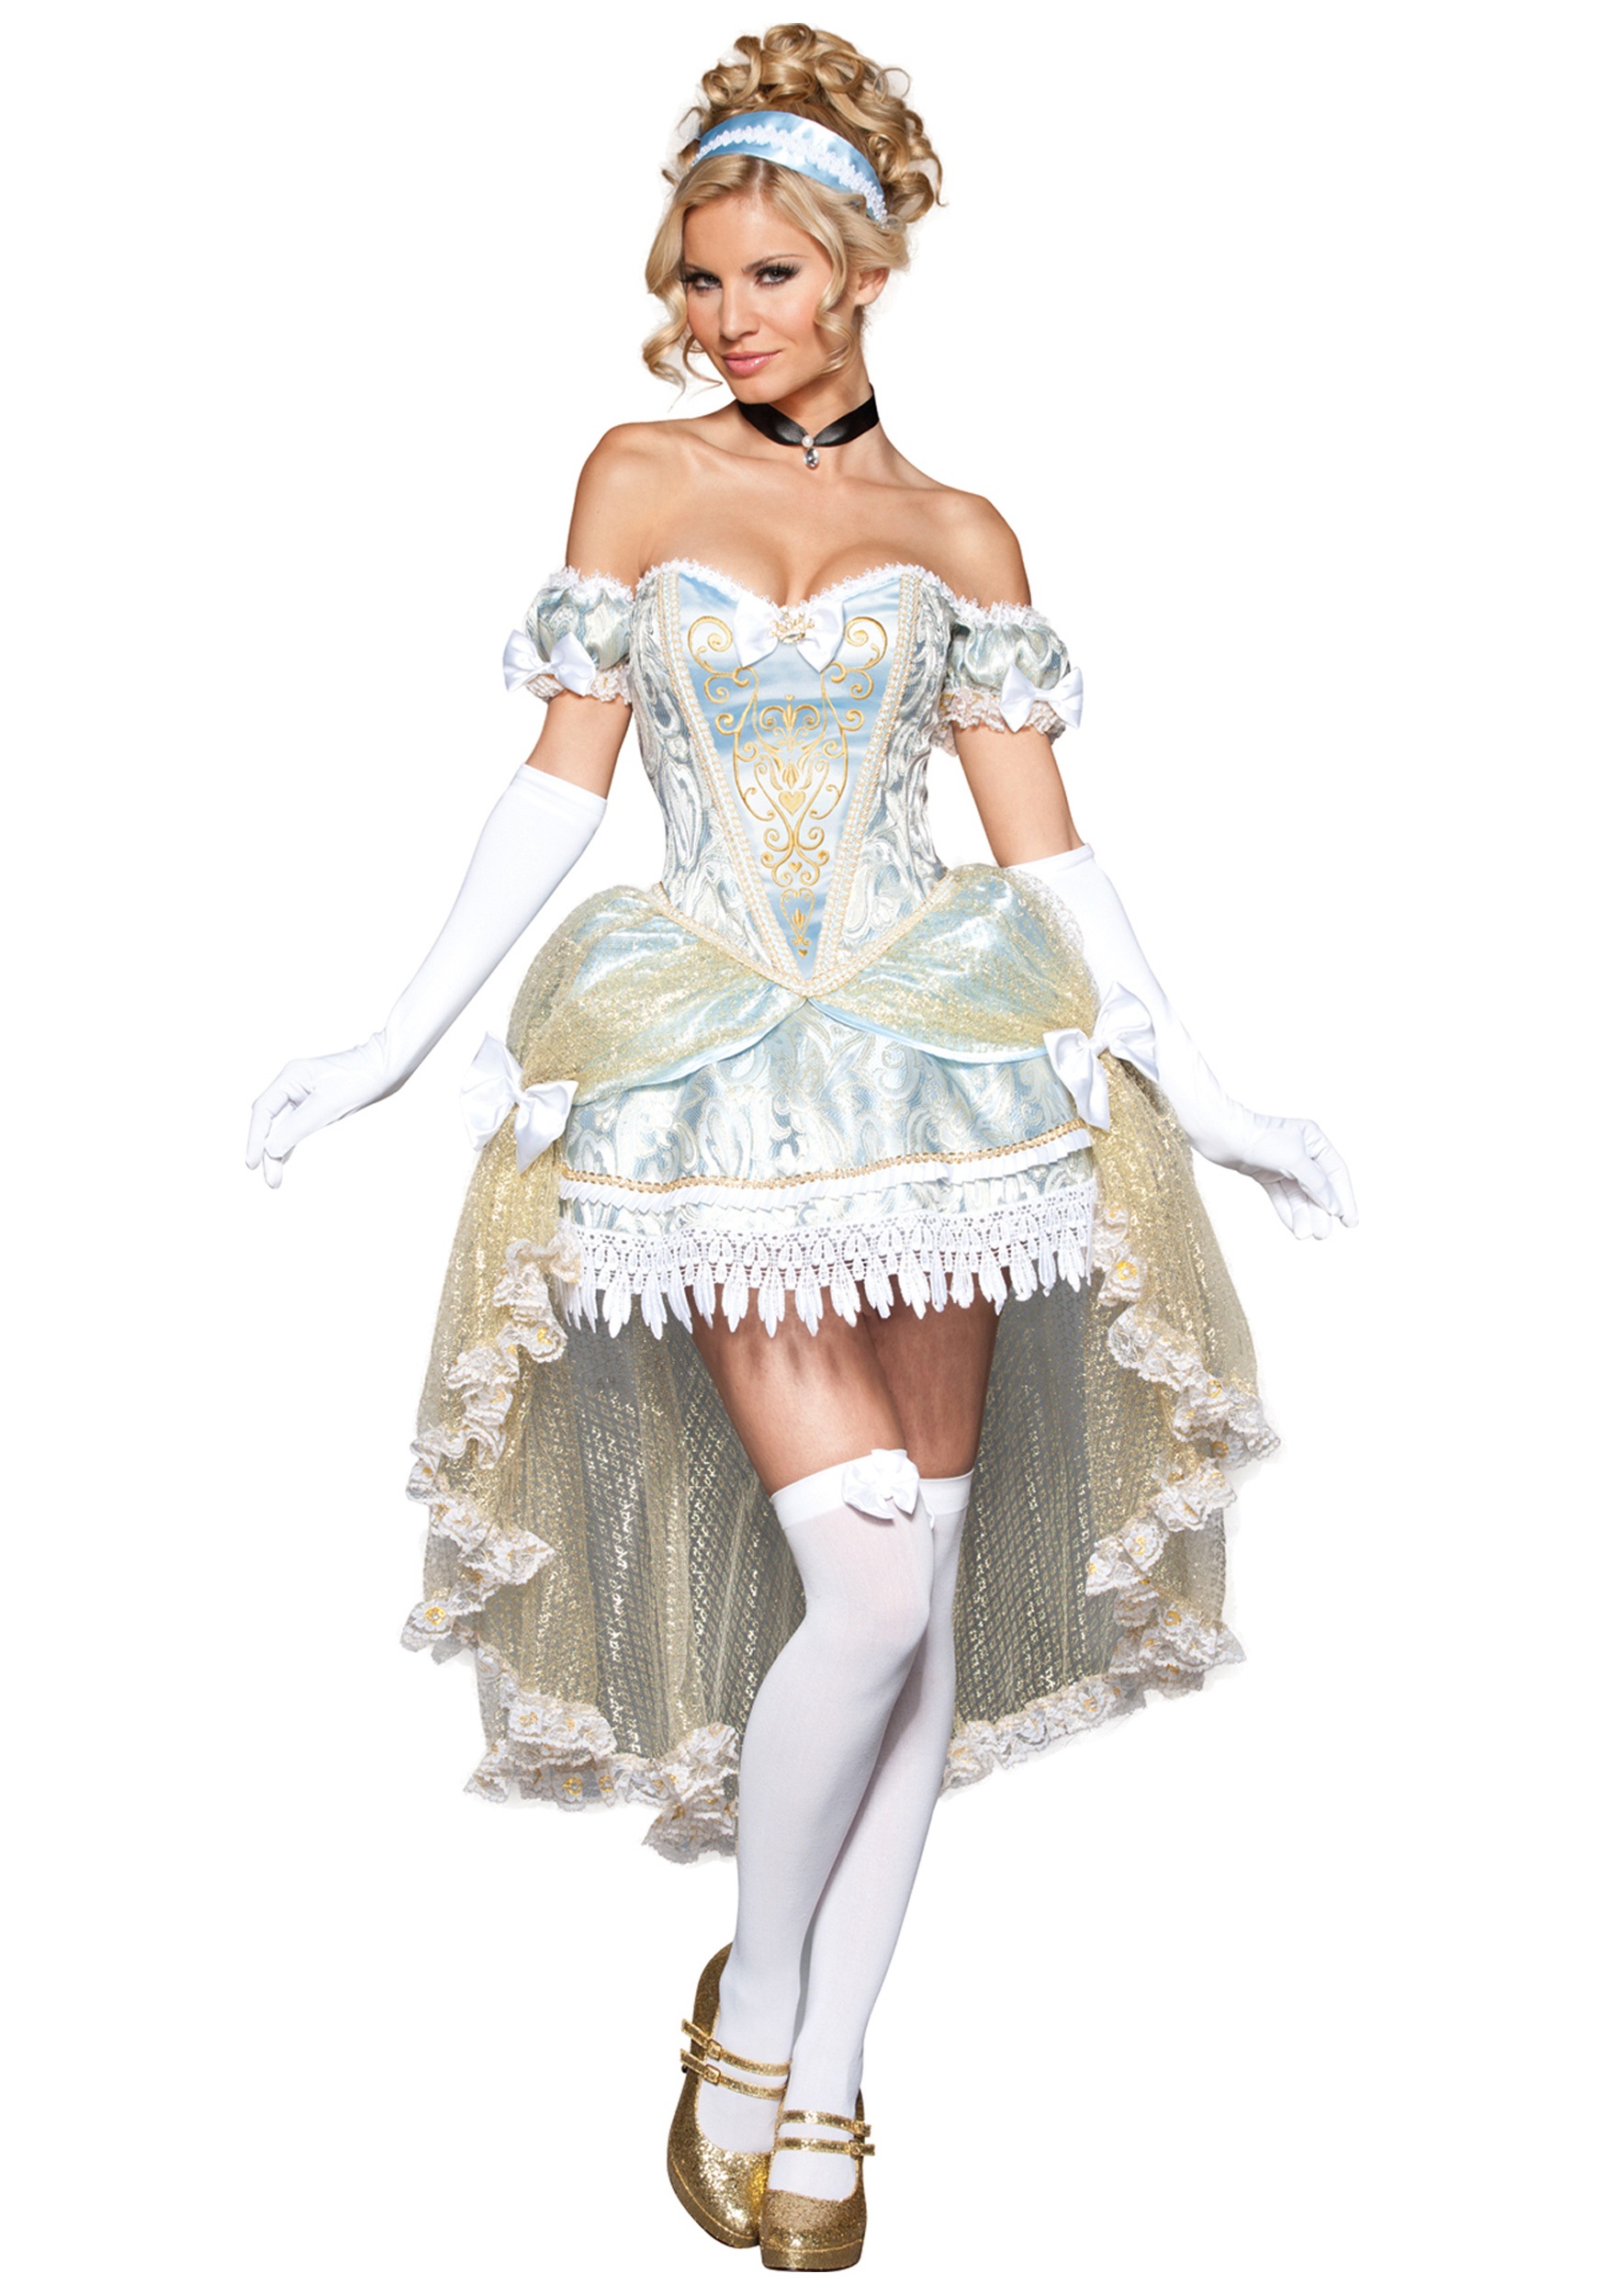 Disney Princess Women's Halloween Fancy-Dress Costume for Adult, S 